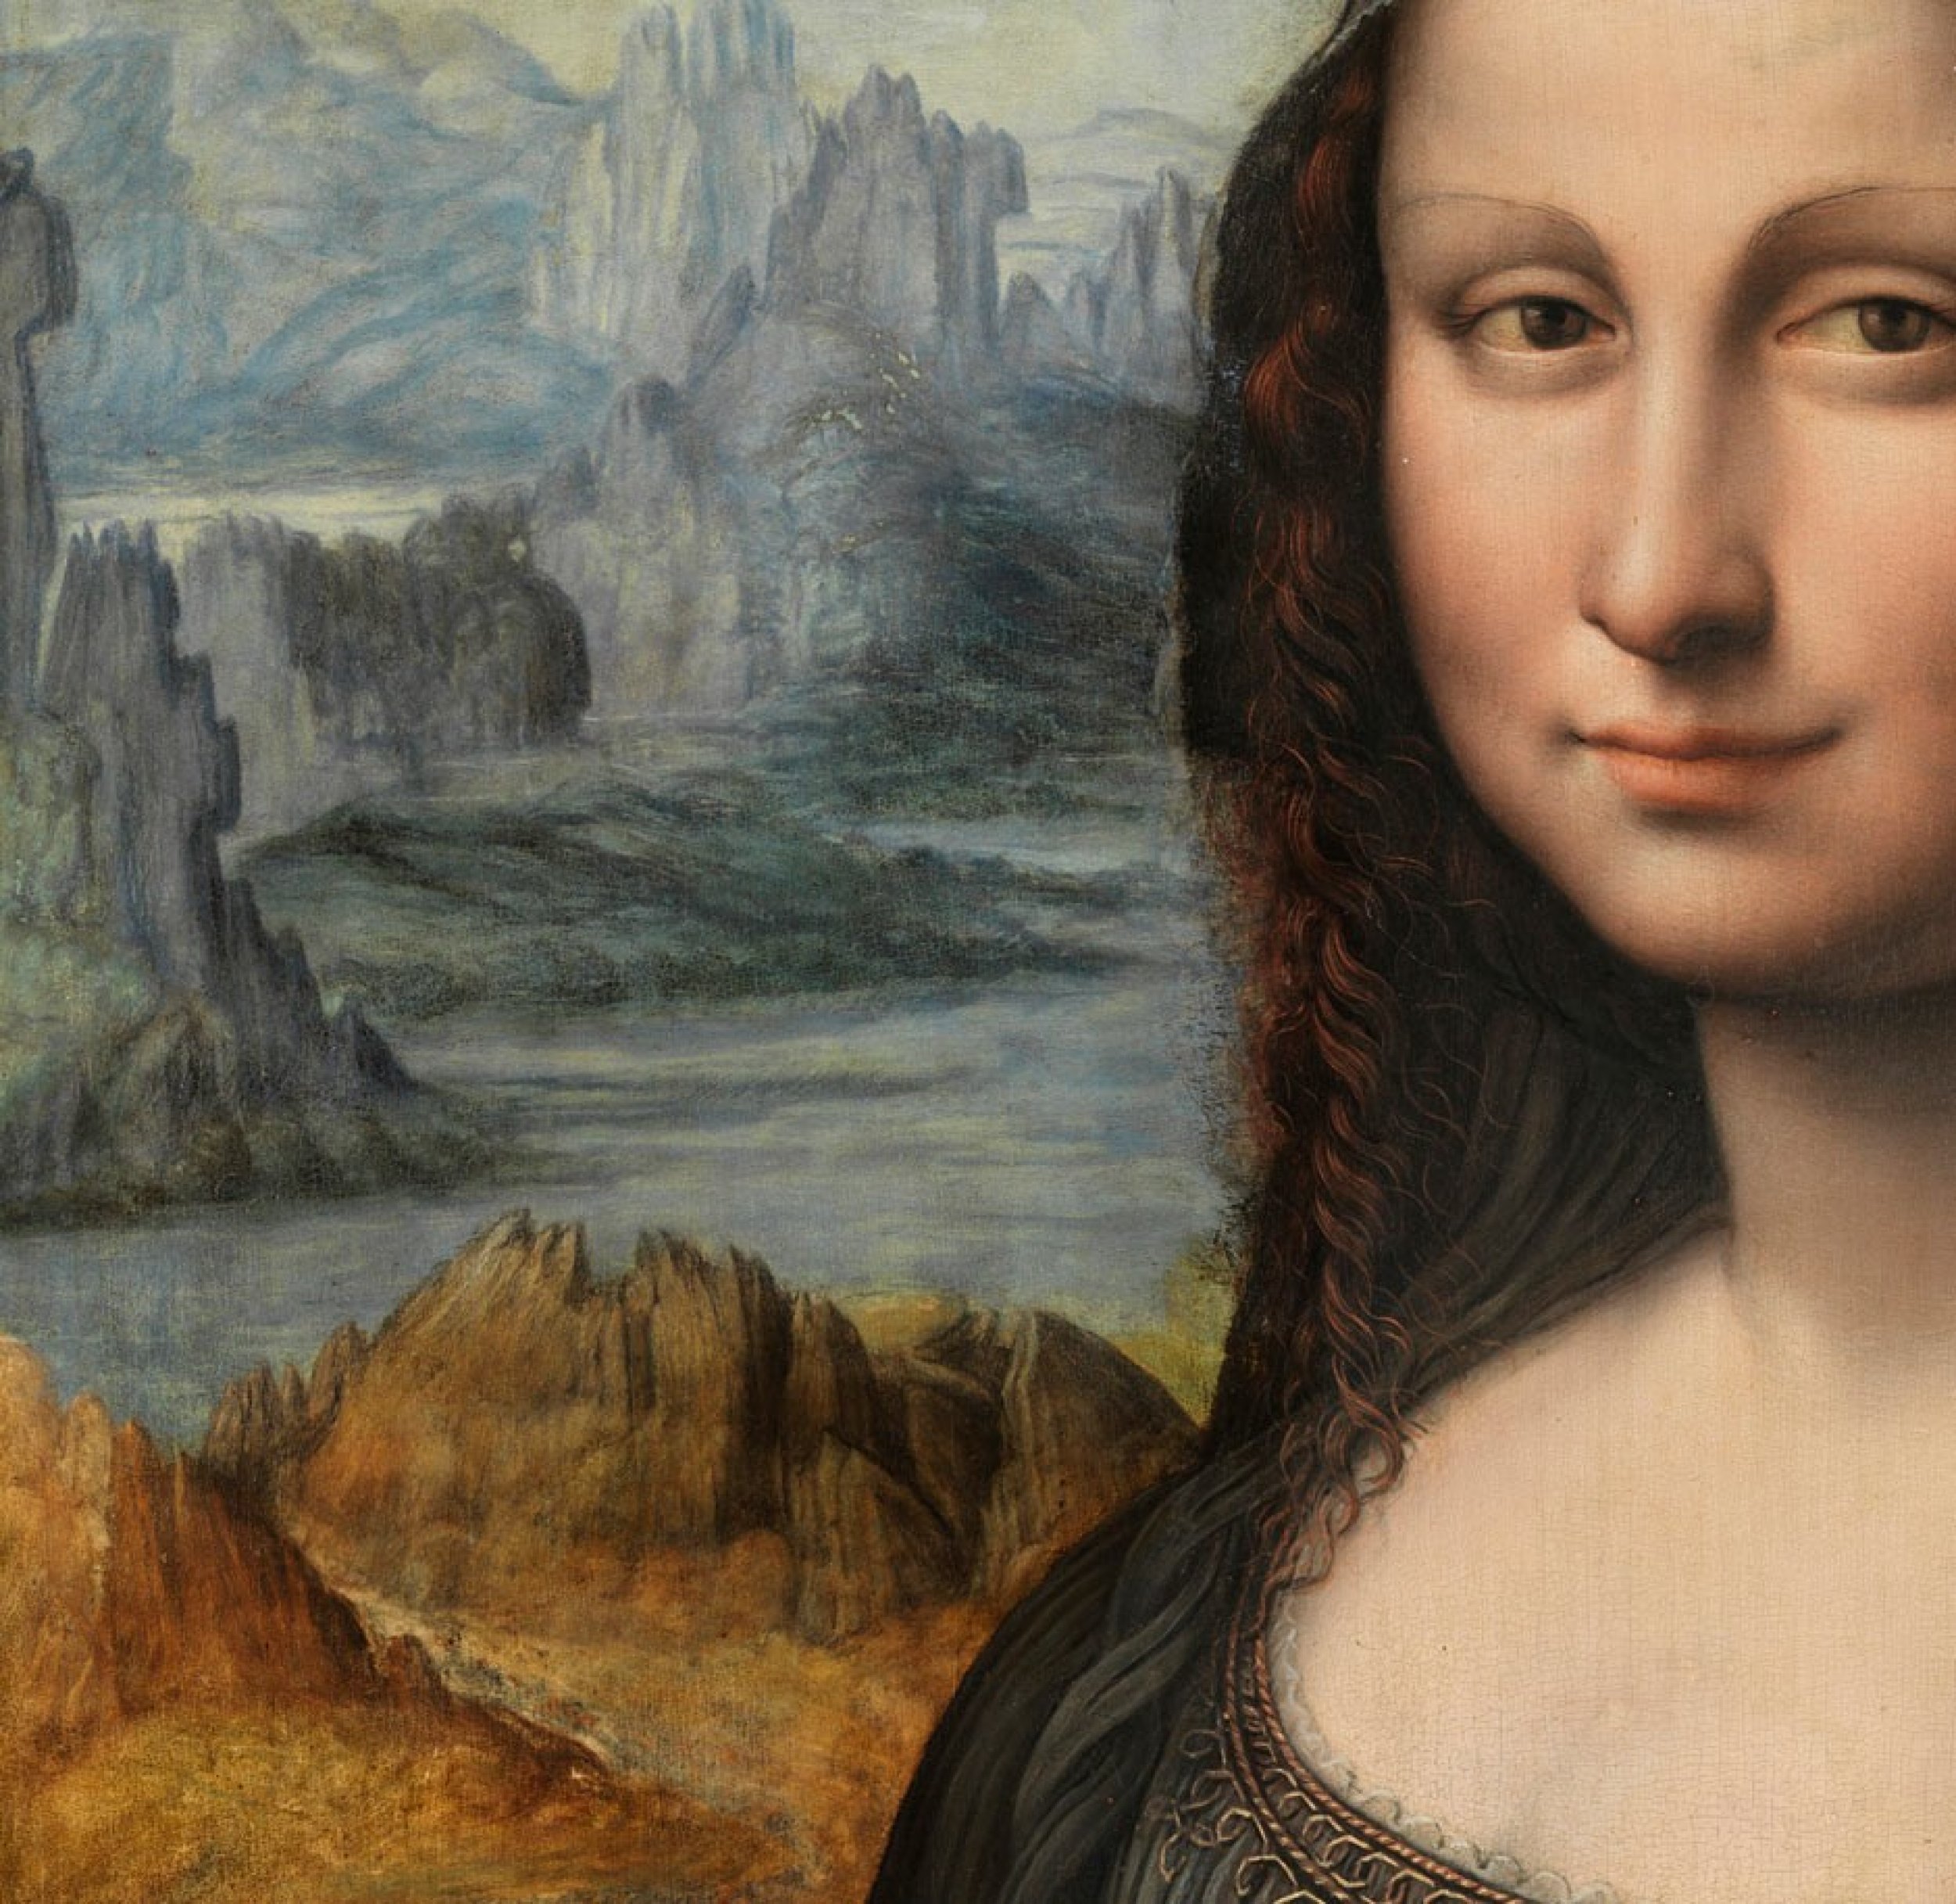 Название самых знаменитых картин. Леонардо да Винчи "Мона Лиза". Айзелуортская Мона Лиза. Фра Джованни Джокондо. Монна Лиза или Мона Лиза.